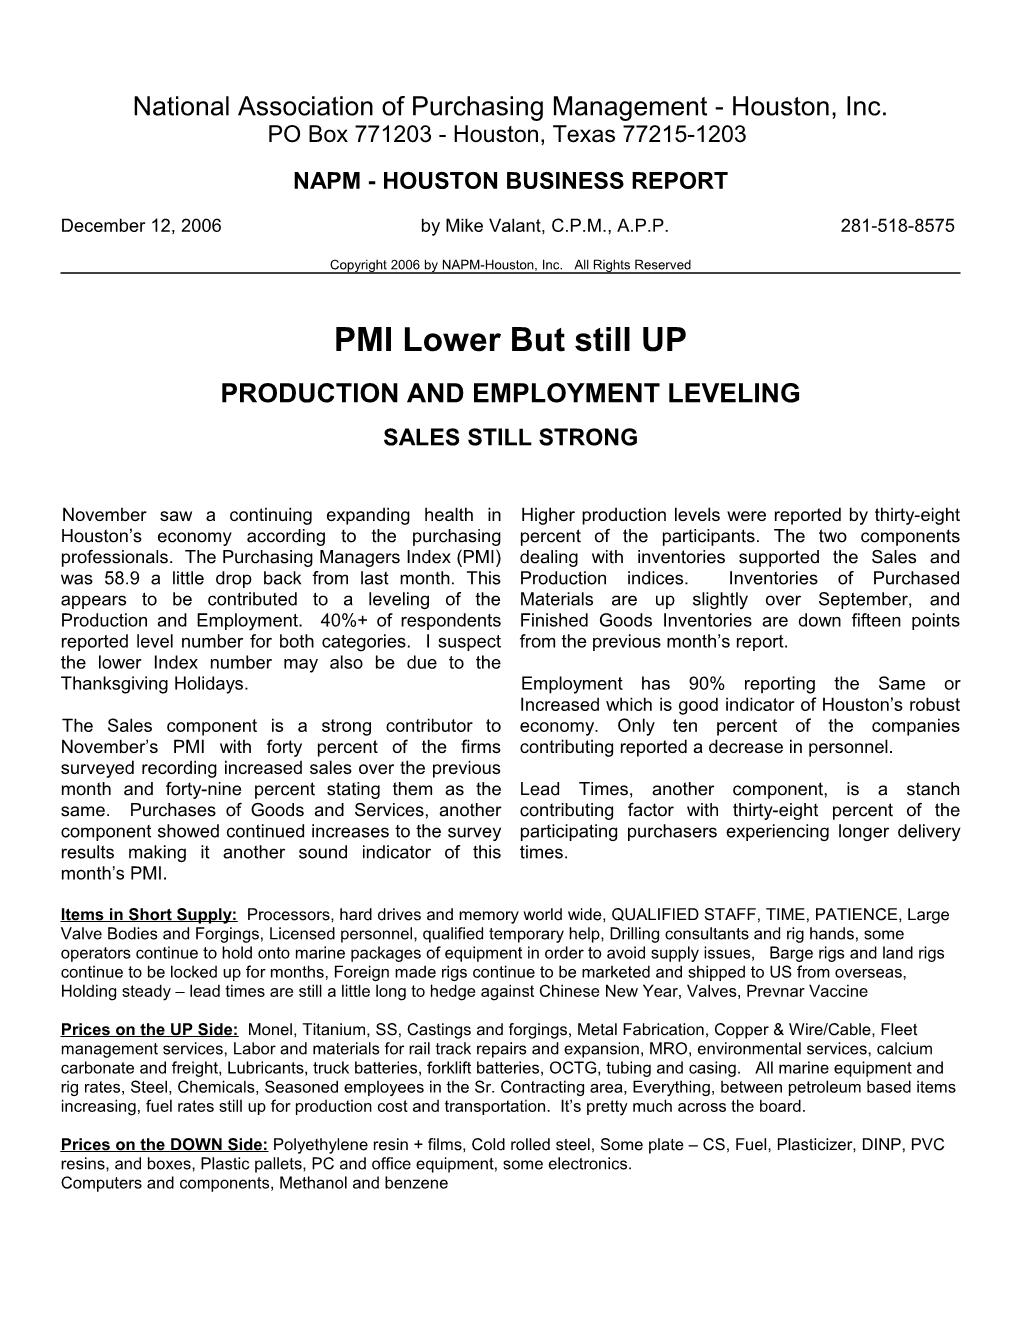 NAPM - Houston, Inc Business Report Summary November 2006